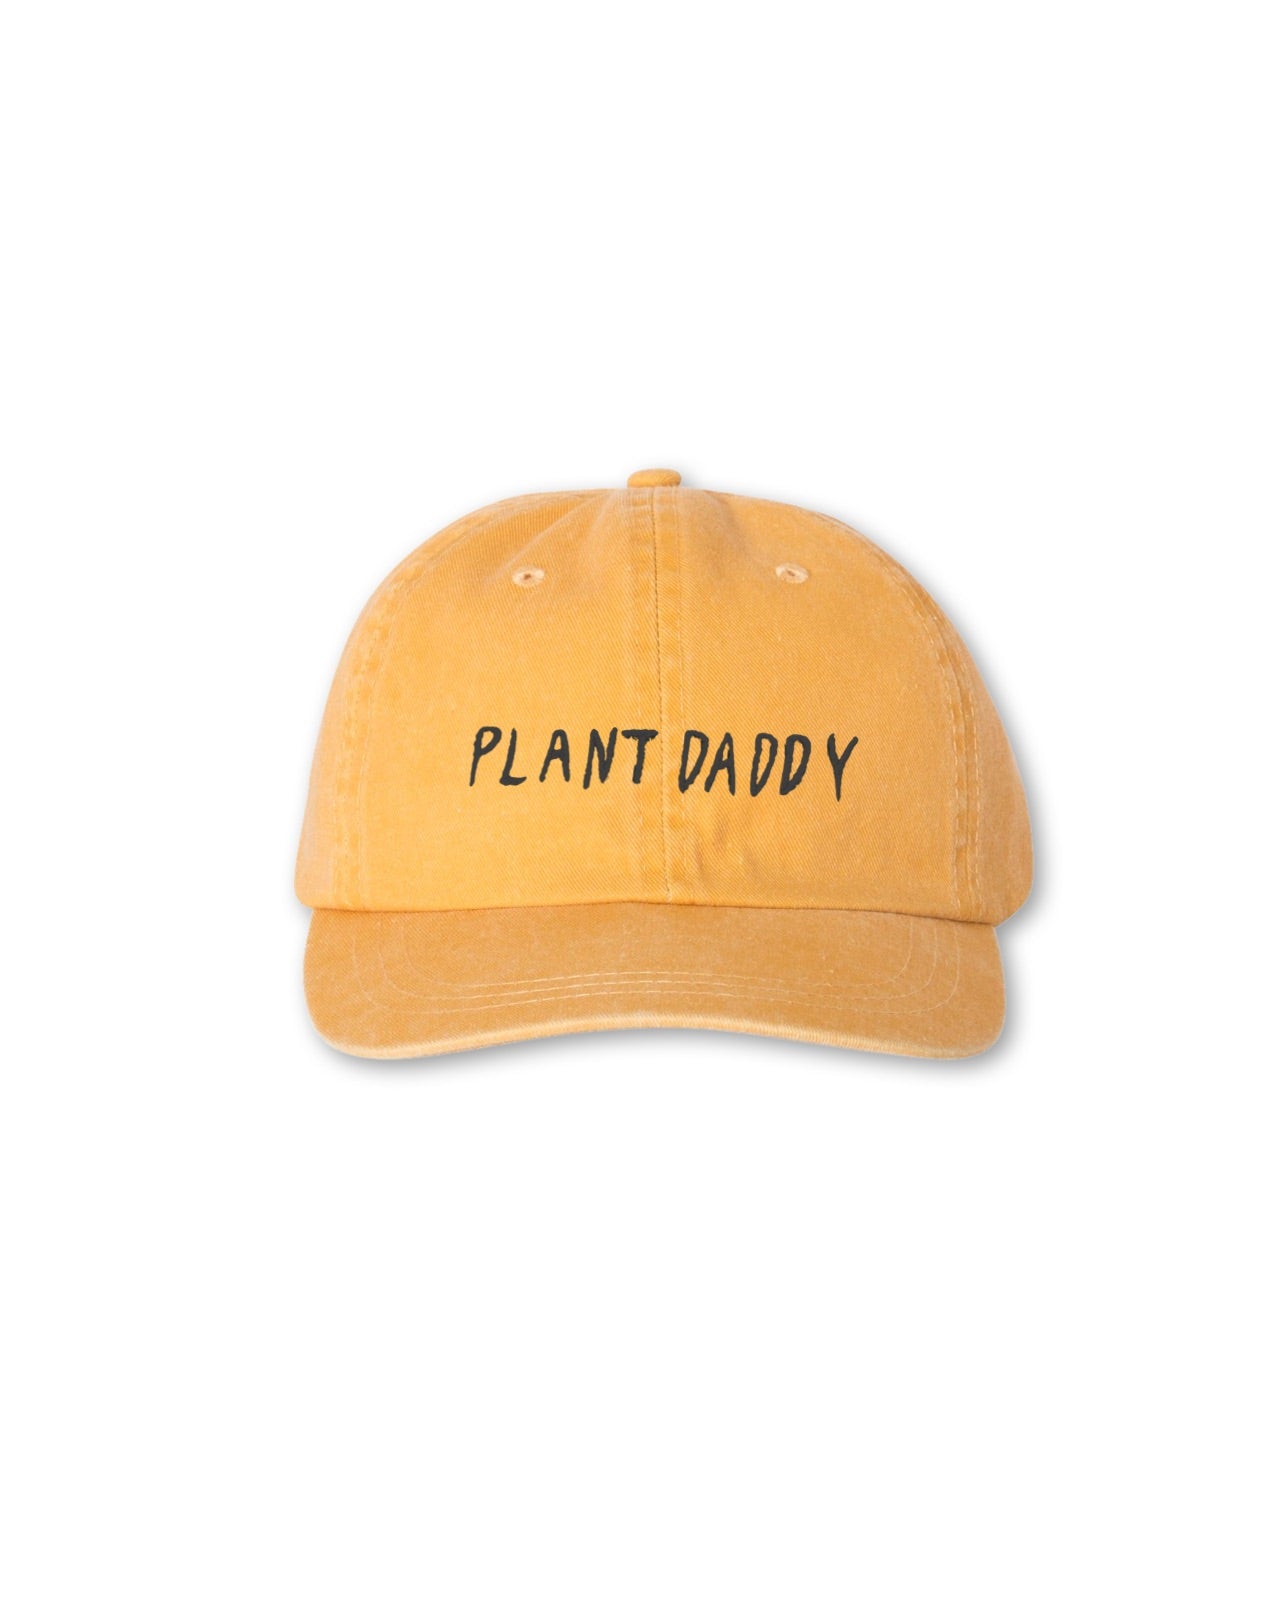 PLANT DADDY HAT